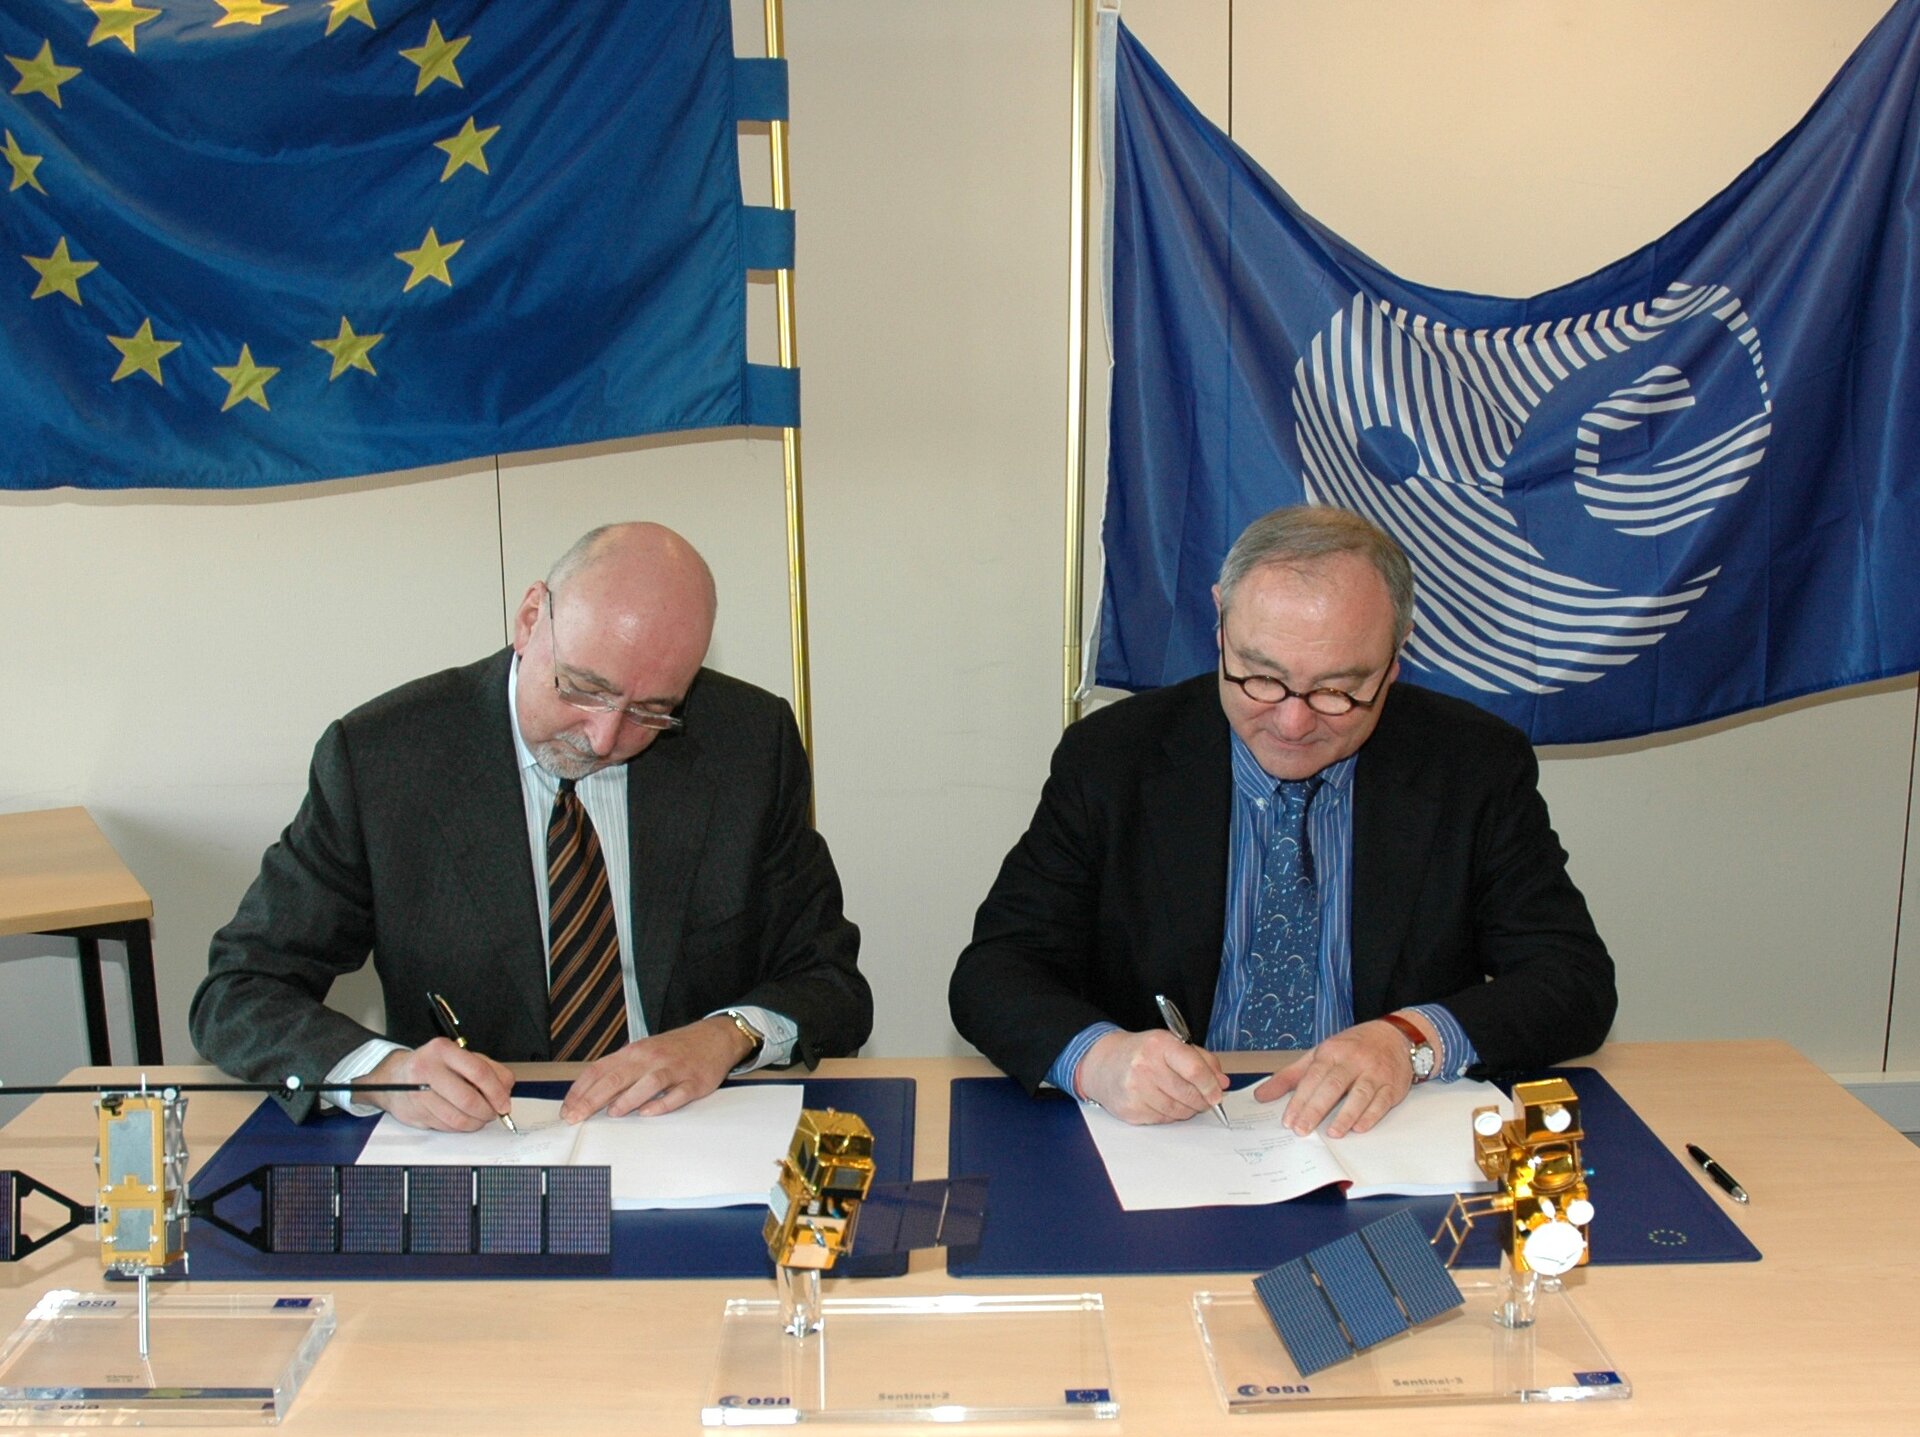 Signing of amendment to EC-ESA GMES agreement